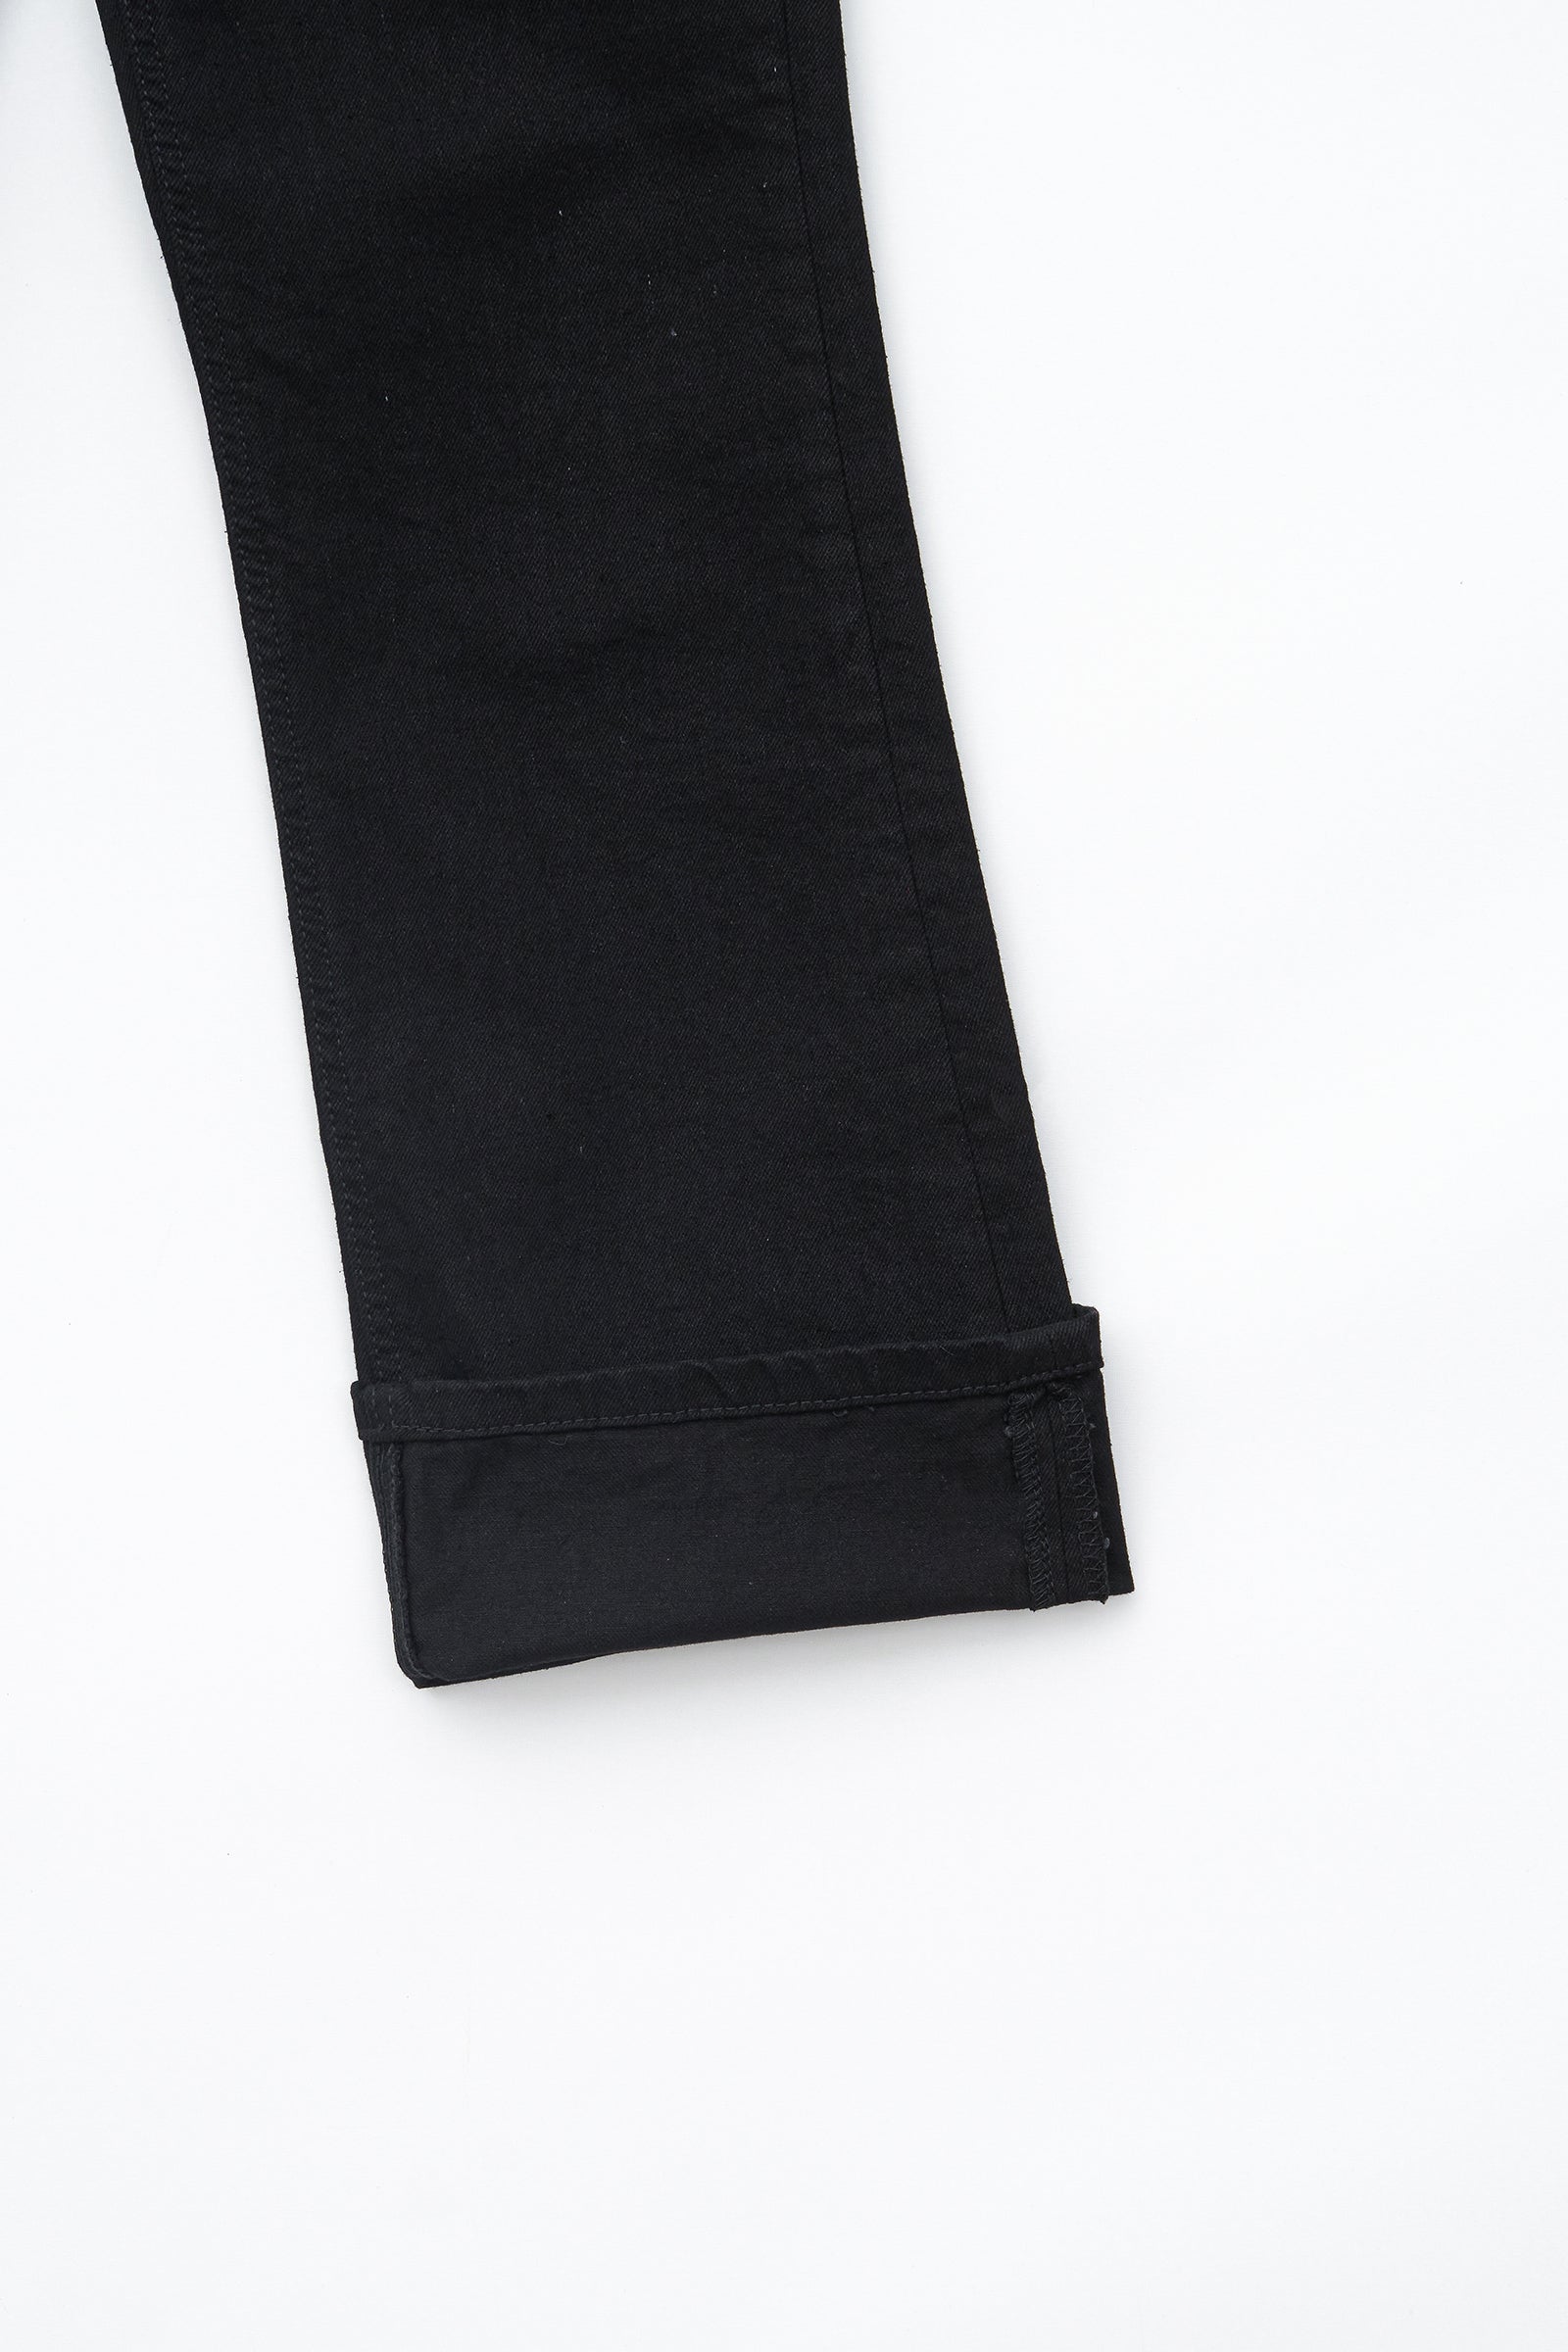 dumaro Rv Semi Boot Cut jeans hififnk